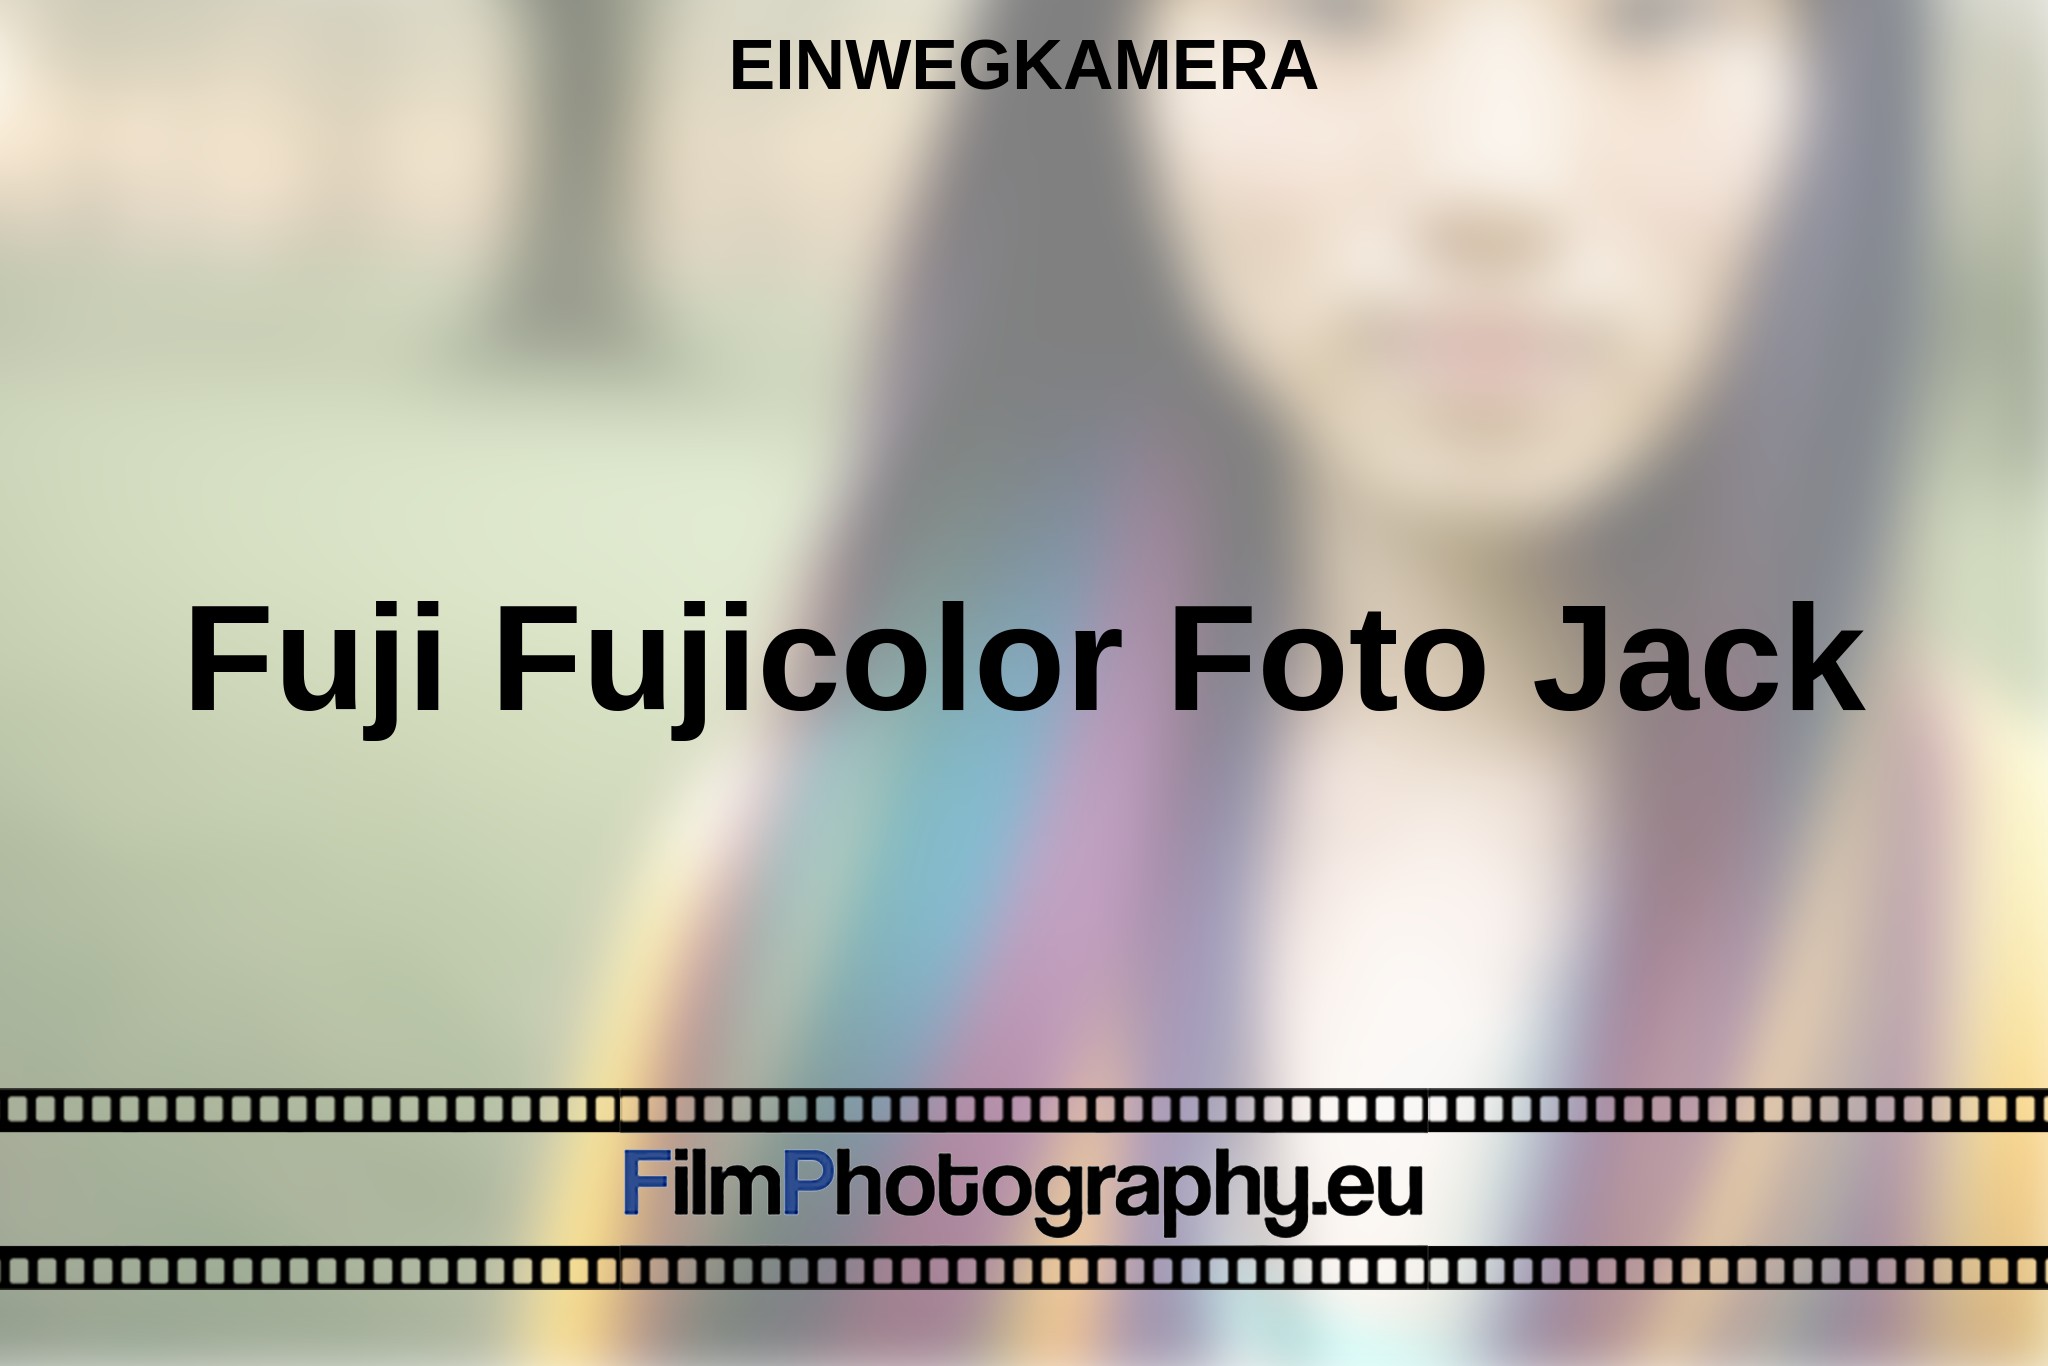 fuji-fujicolor-foto-jack-einwegkamera-bnv.jpg